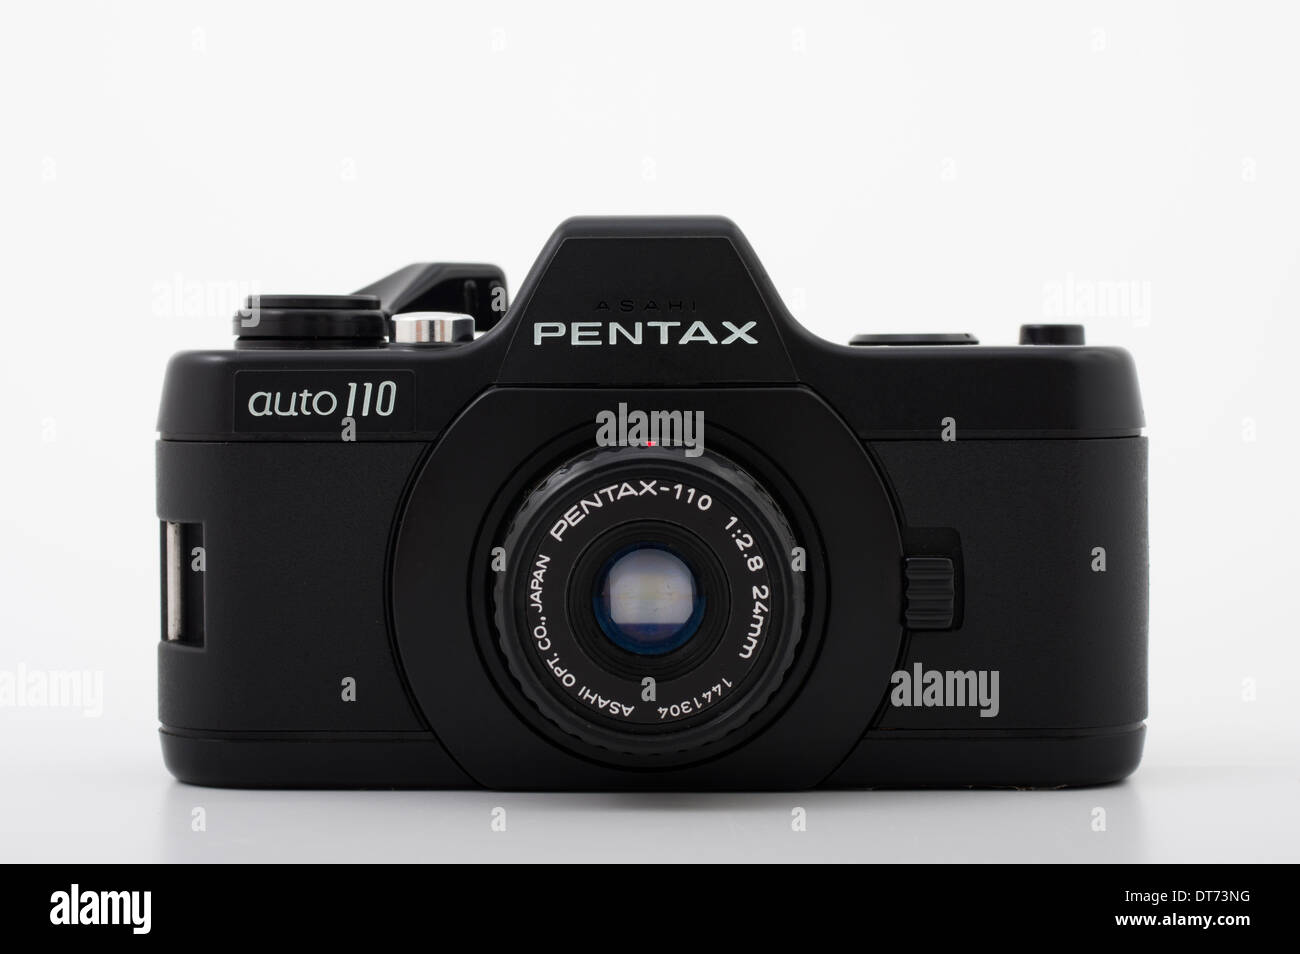 Pentax auto 110 film SLR camera using compact 110 film Stock Photo